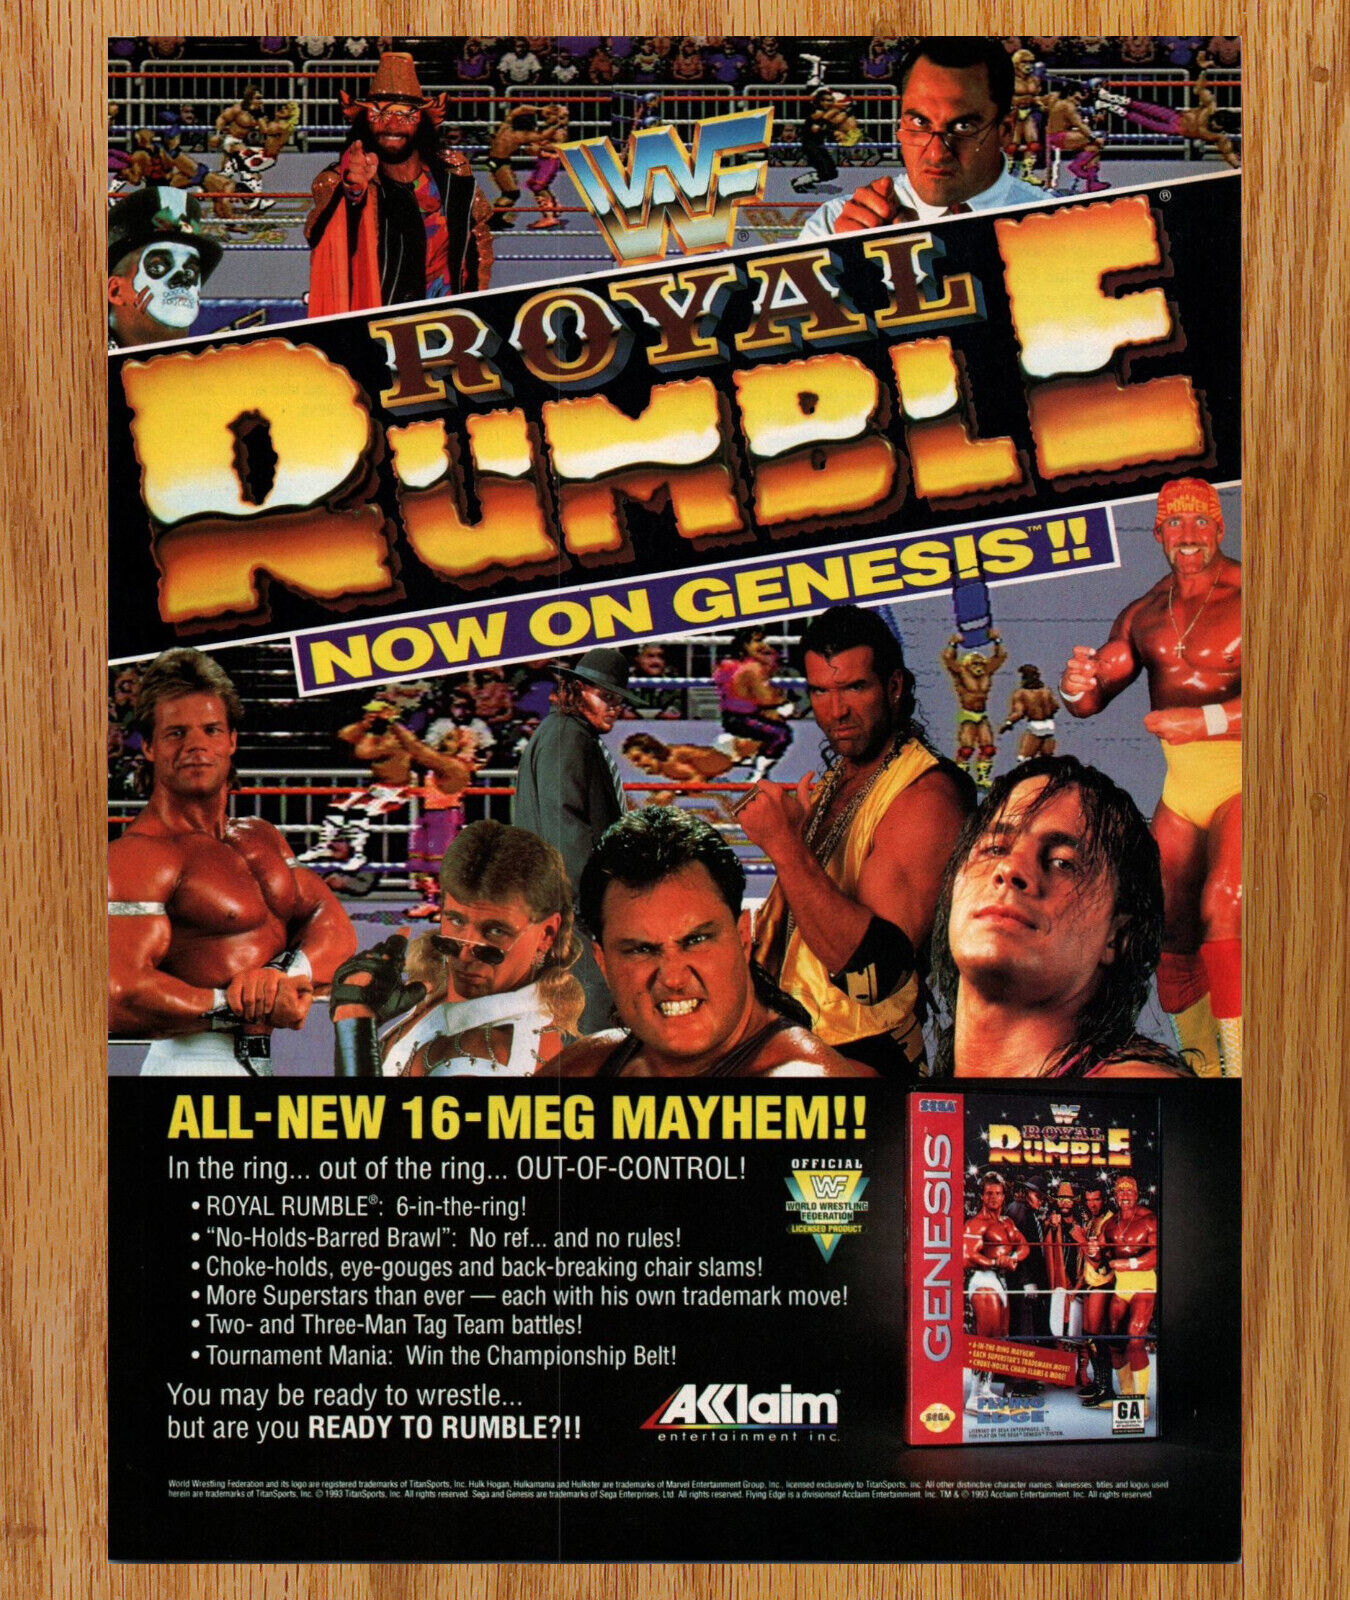 WWF Royal Rumble Genesis Acclaim - Video Game Print Ads Poster Promo Art 1993